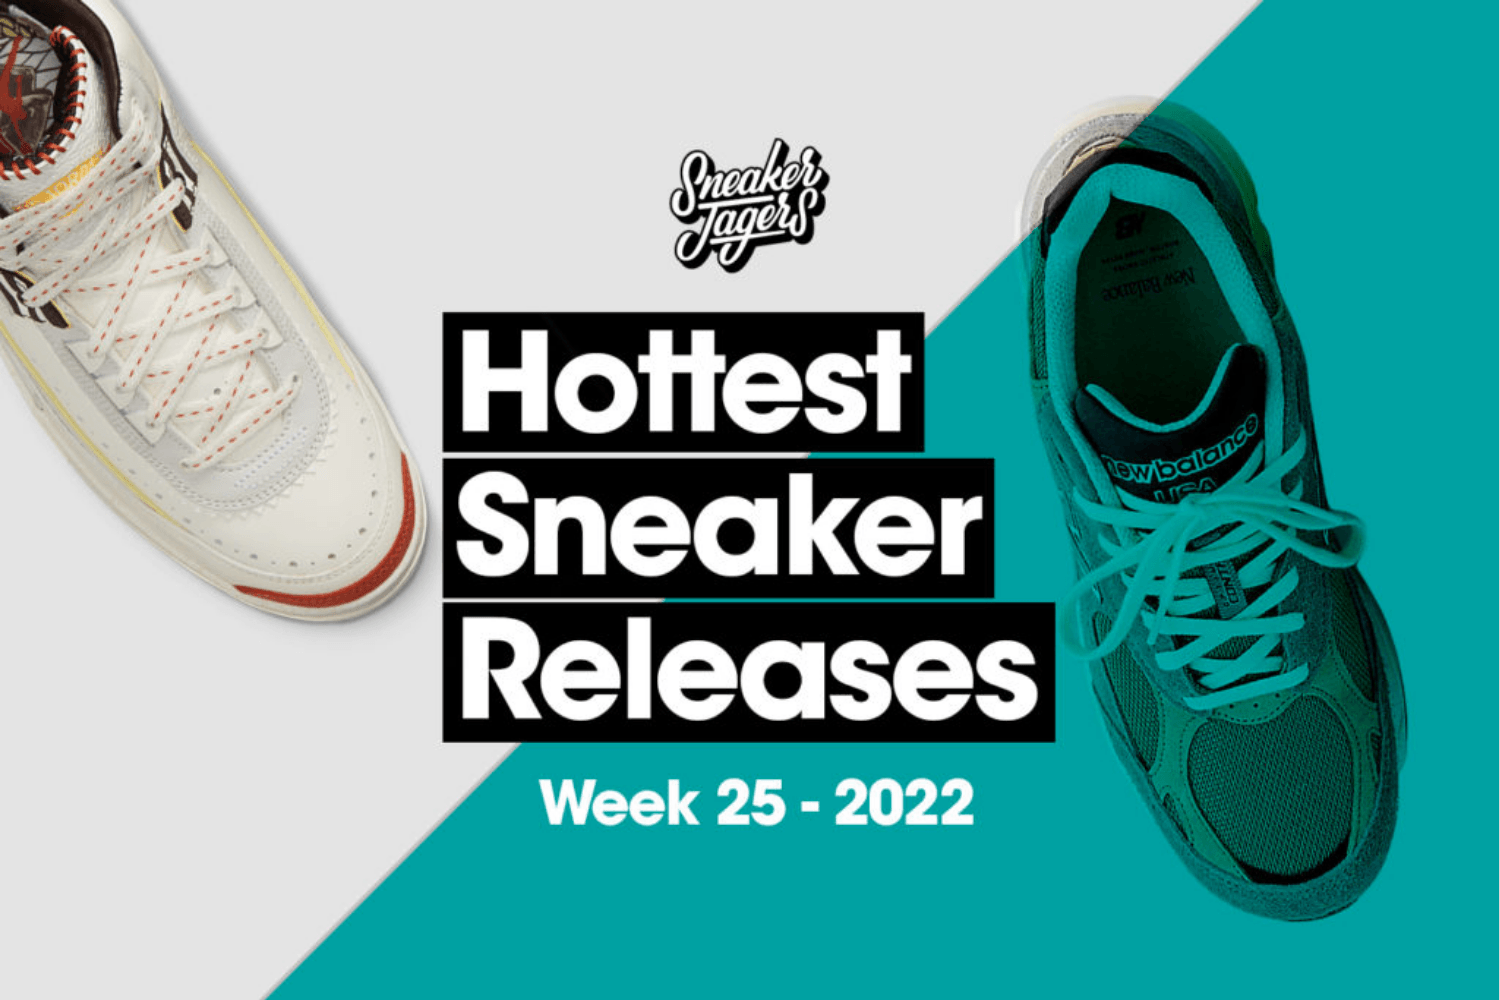 Hottest Sneaker Release Reminder Juni 🔥 Woche 25